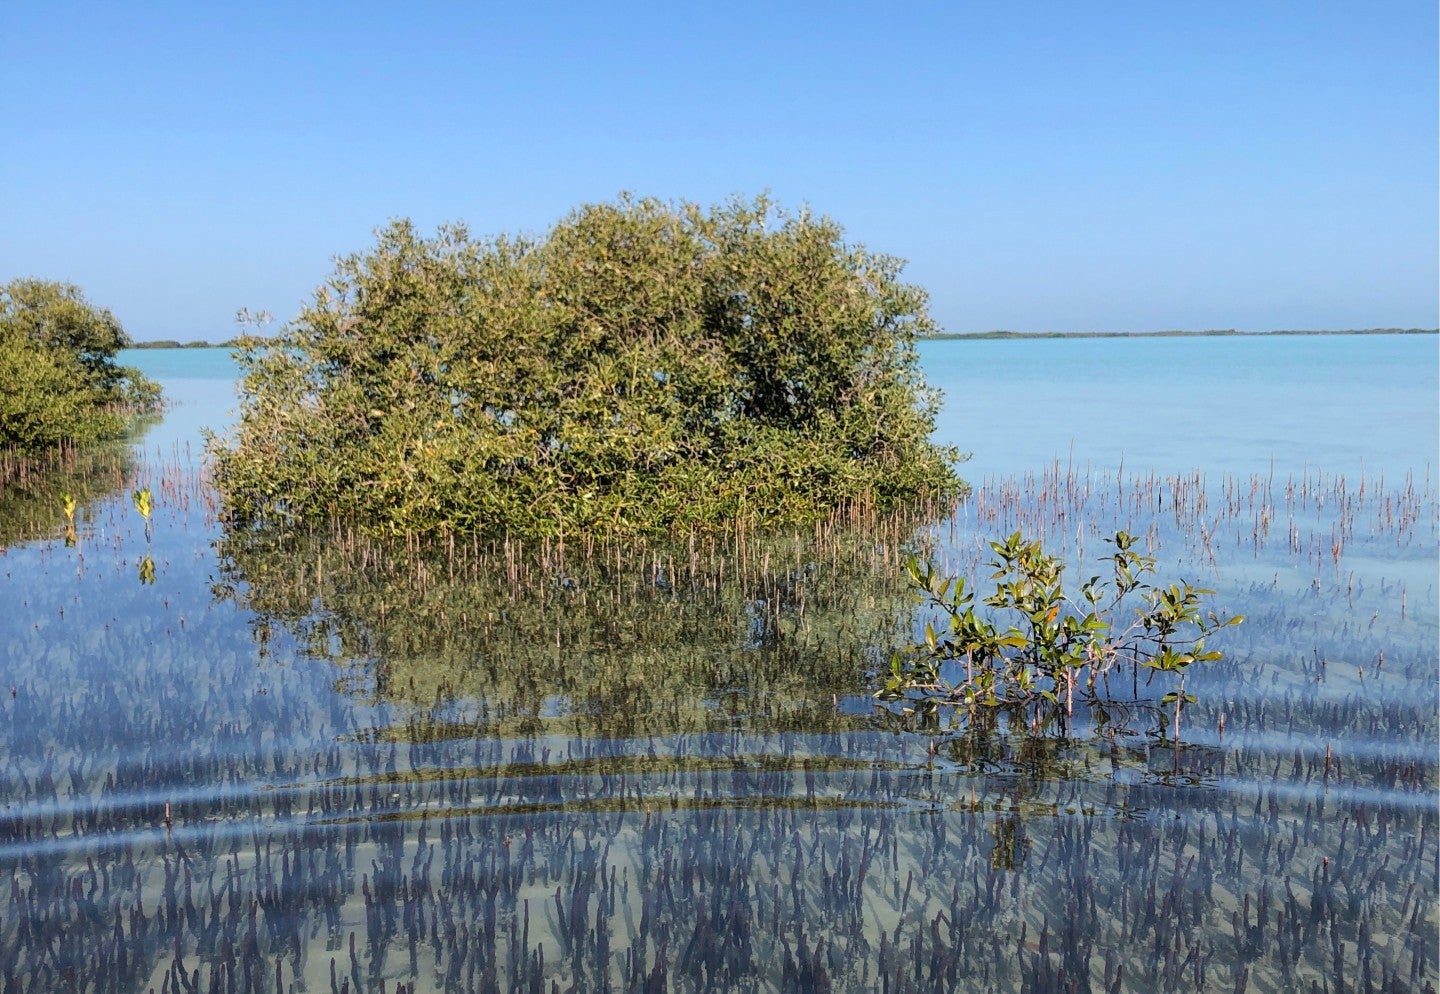 Grey mangroves growing in the Red Sea off the coast of Saudi Arabia